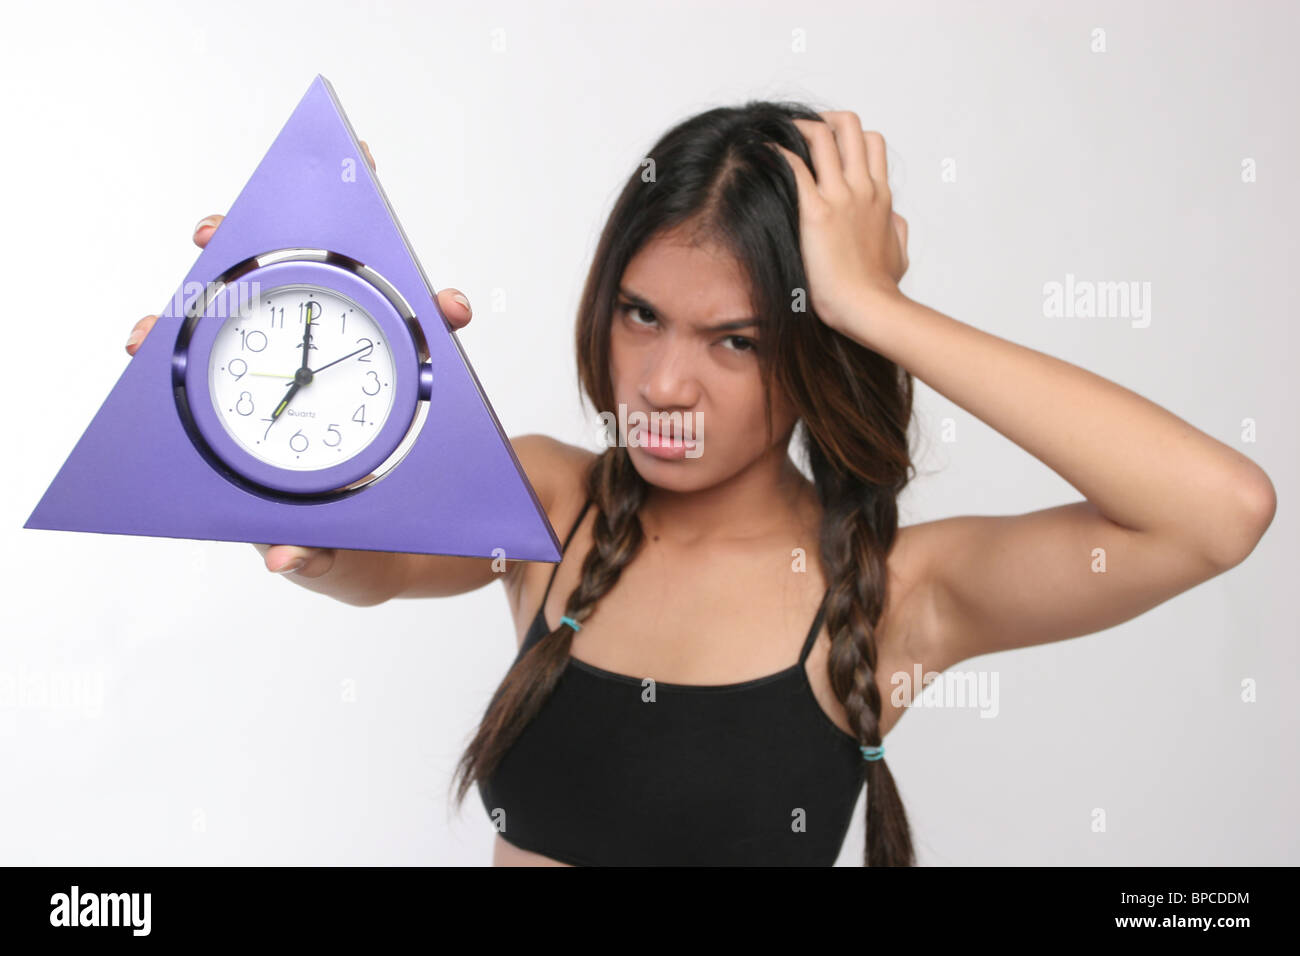 girl show triangle clock watch Stock Photo